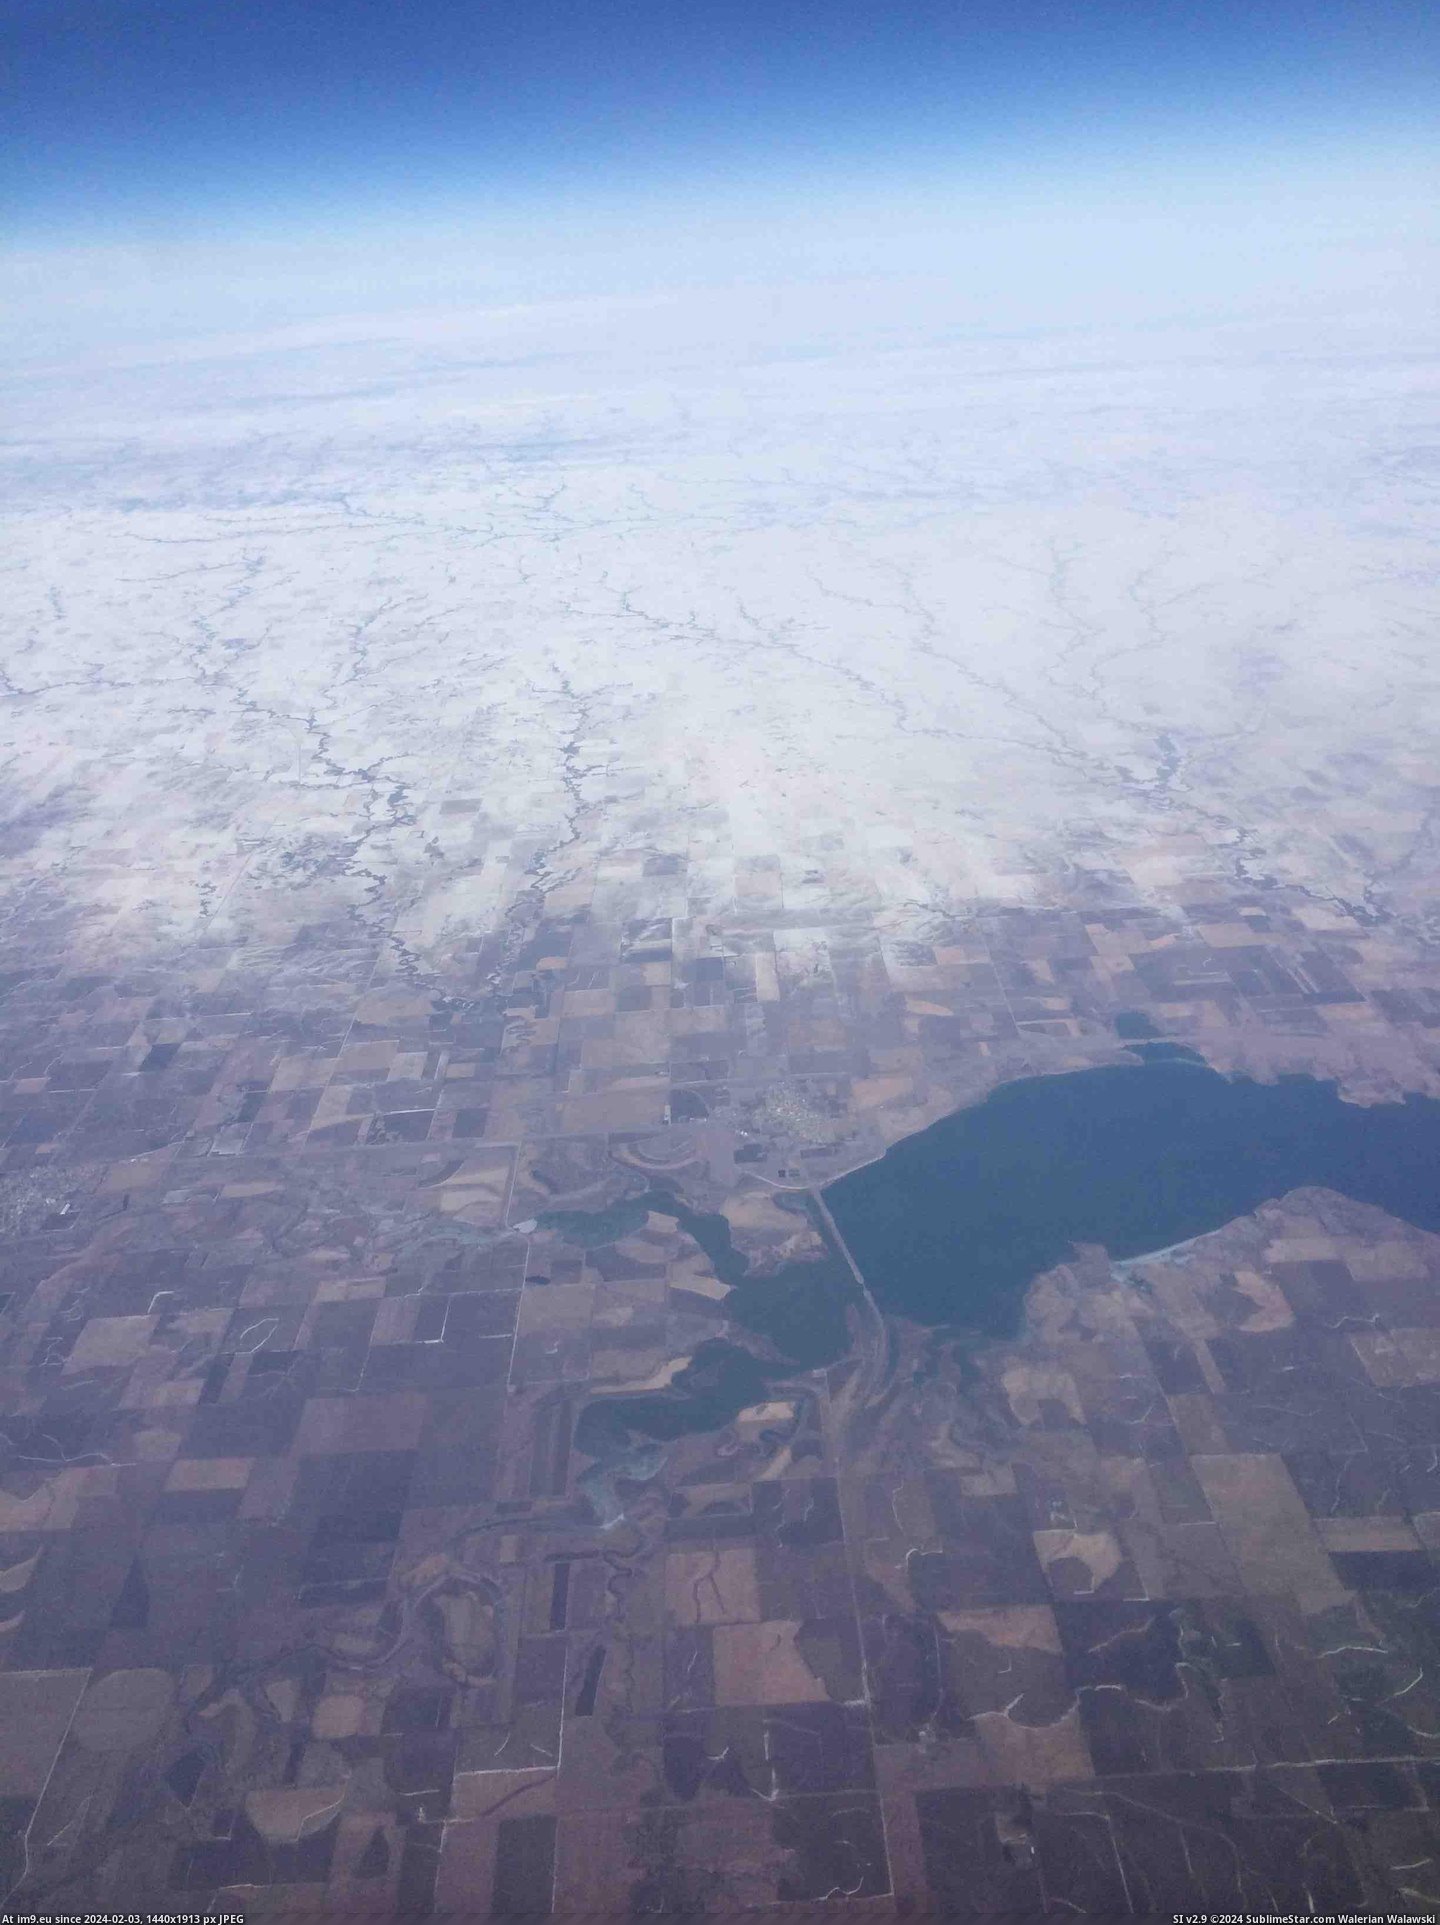 #Hit #Weekend #Flew #Snowstorm #Chicago #Edge [Mildlyinteresting] I flew over the edge of the snowstorm that hit Chicago last weekend. Pic. (Изображение из альбом My r/MILDLYINTERESTING favs))